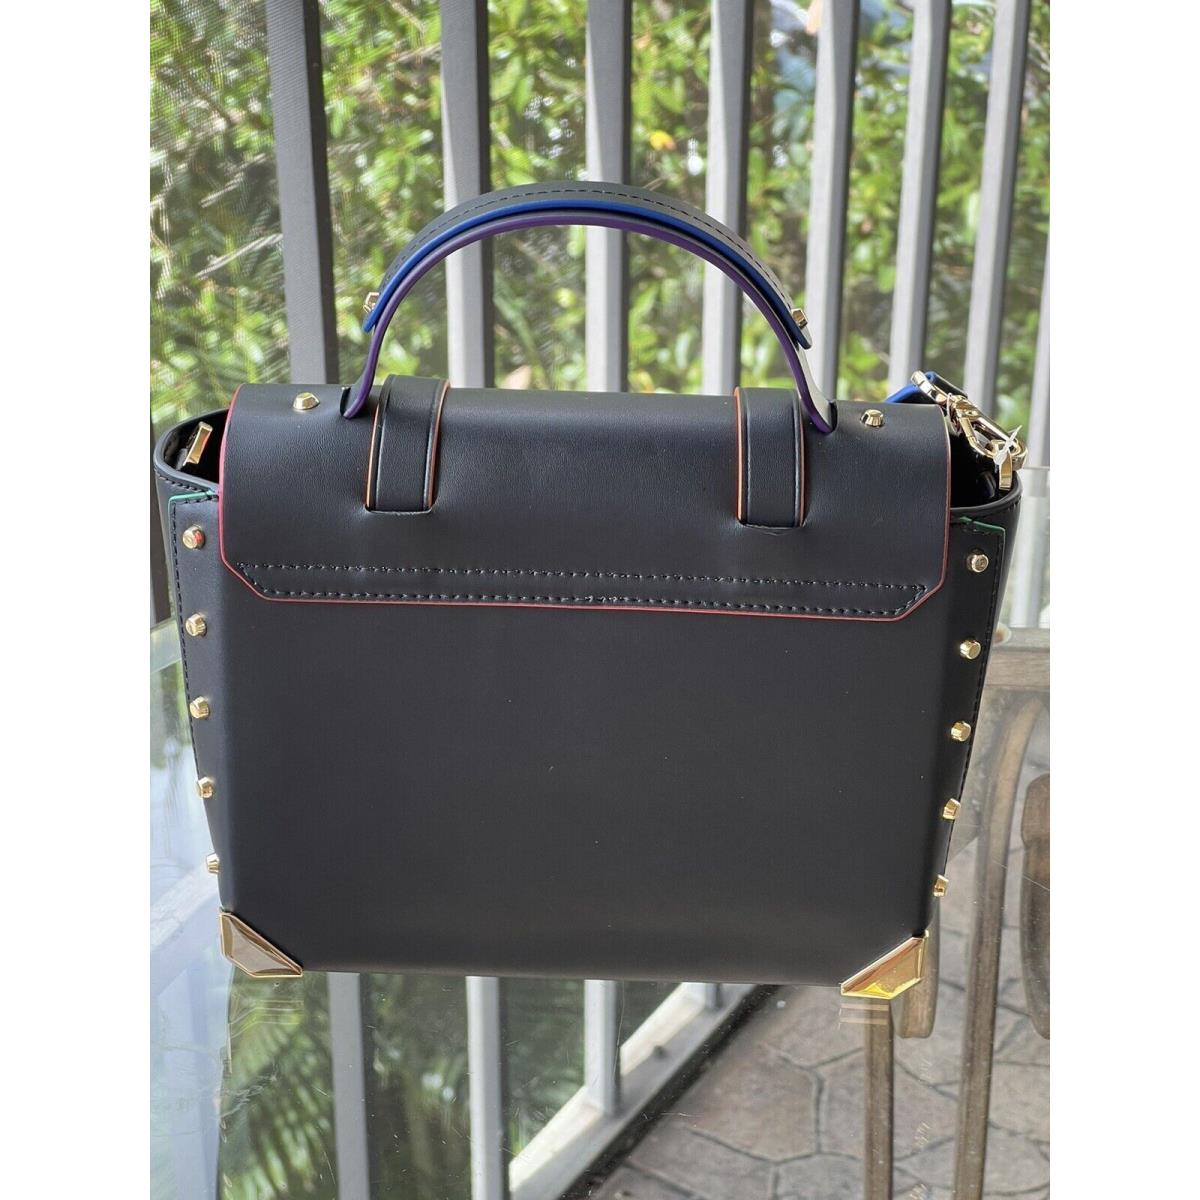 Michael Kors Leather or PVC Crossbody Bag Handbag Messenger Shoulder Purse  Black | eBay